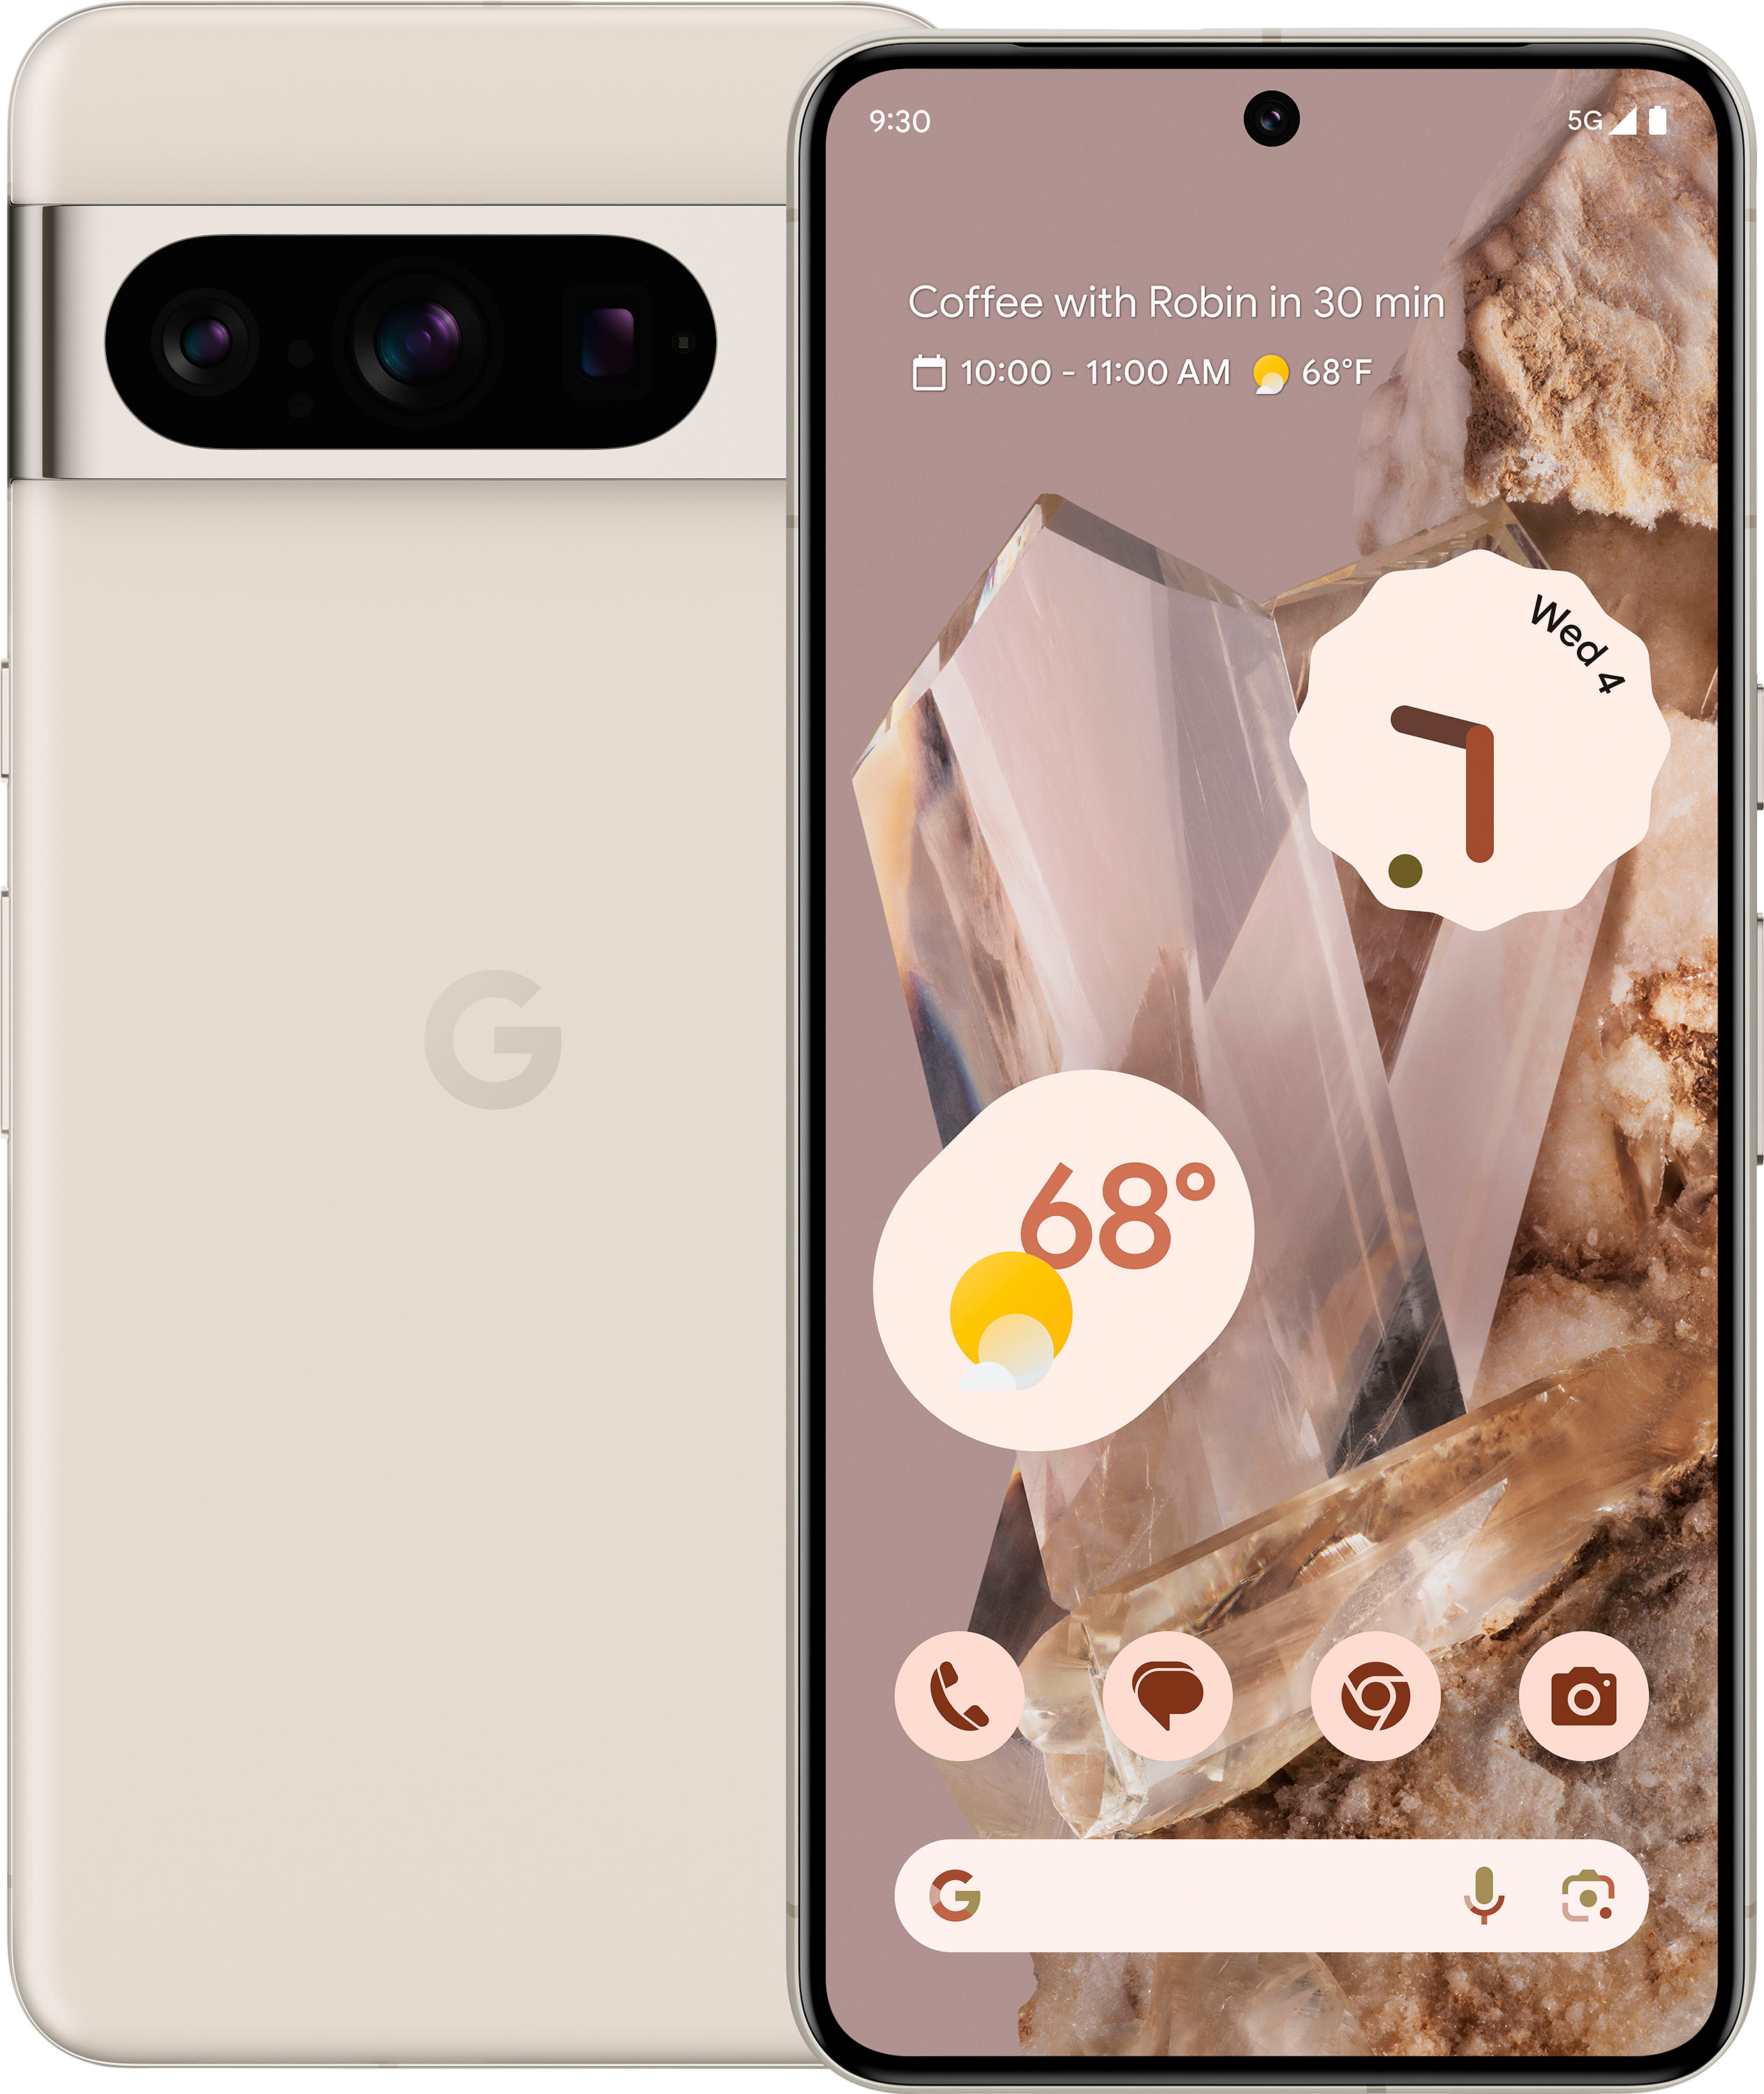 Google Pixel 8 and Pixel 8 Pro: Features, specs, price